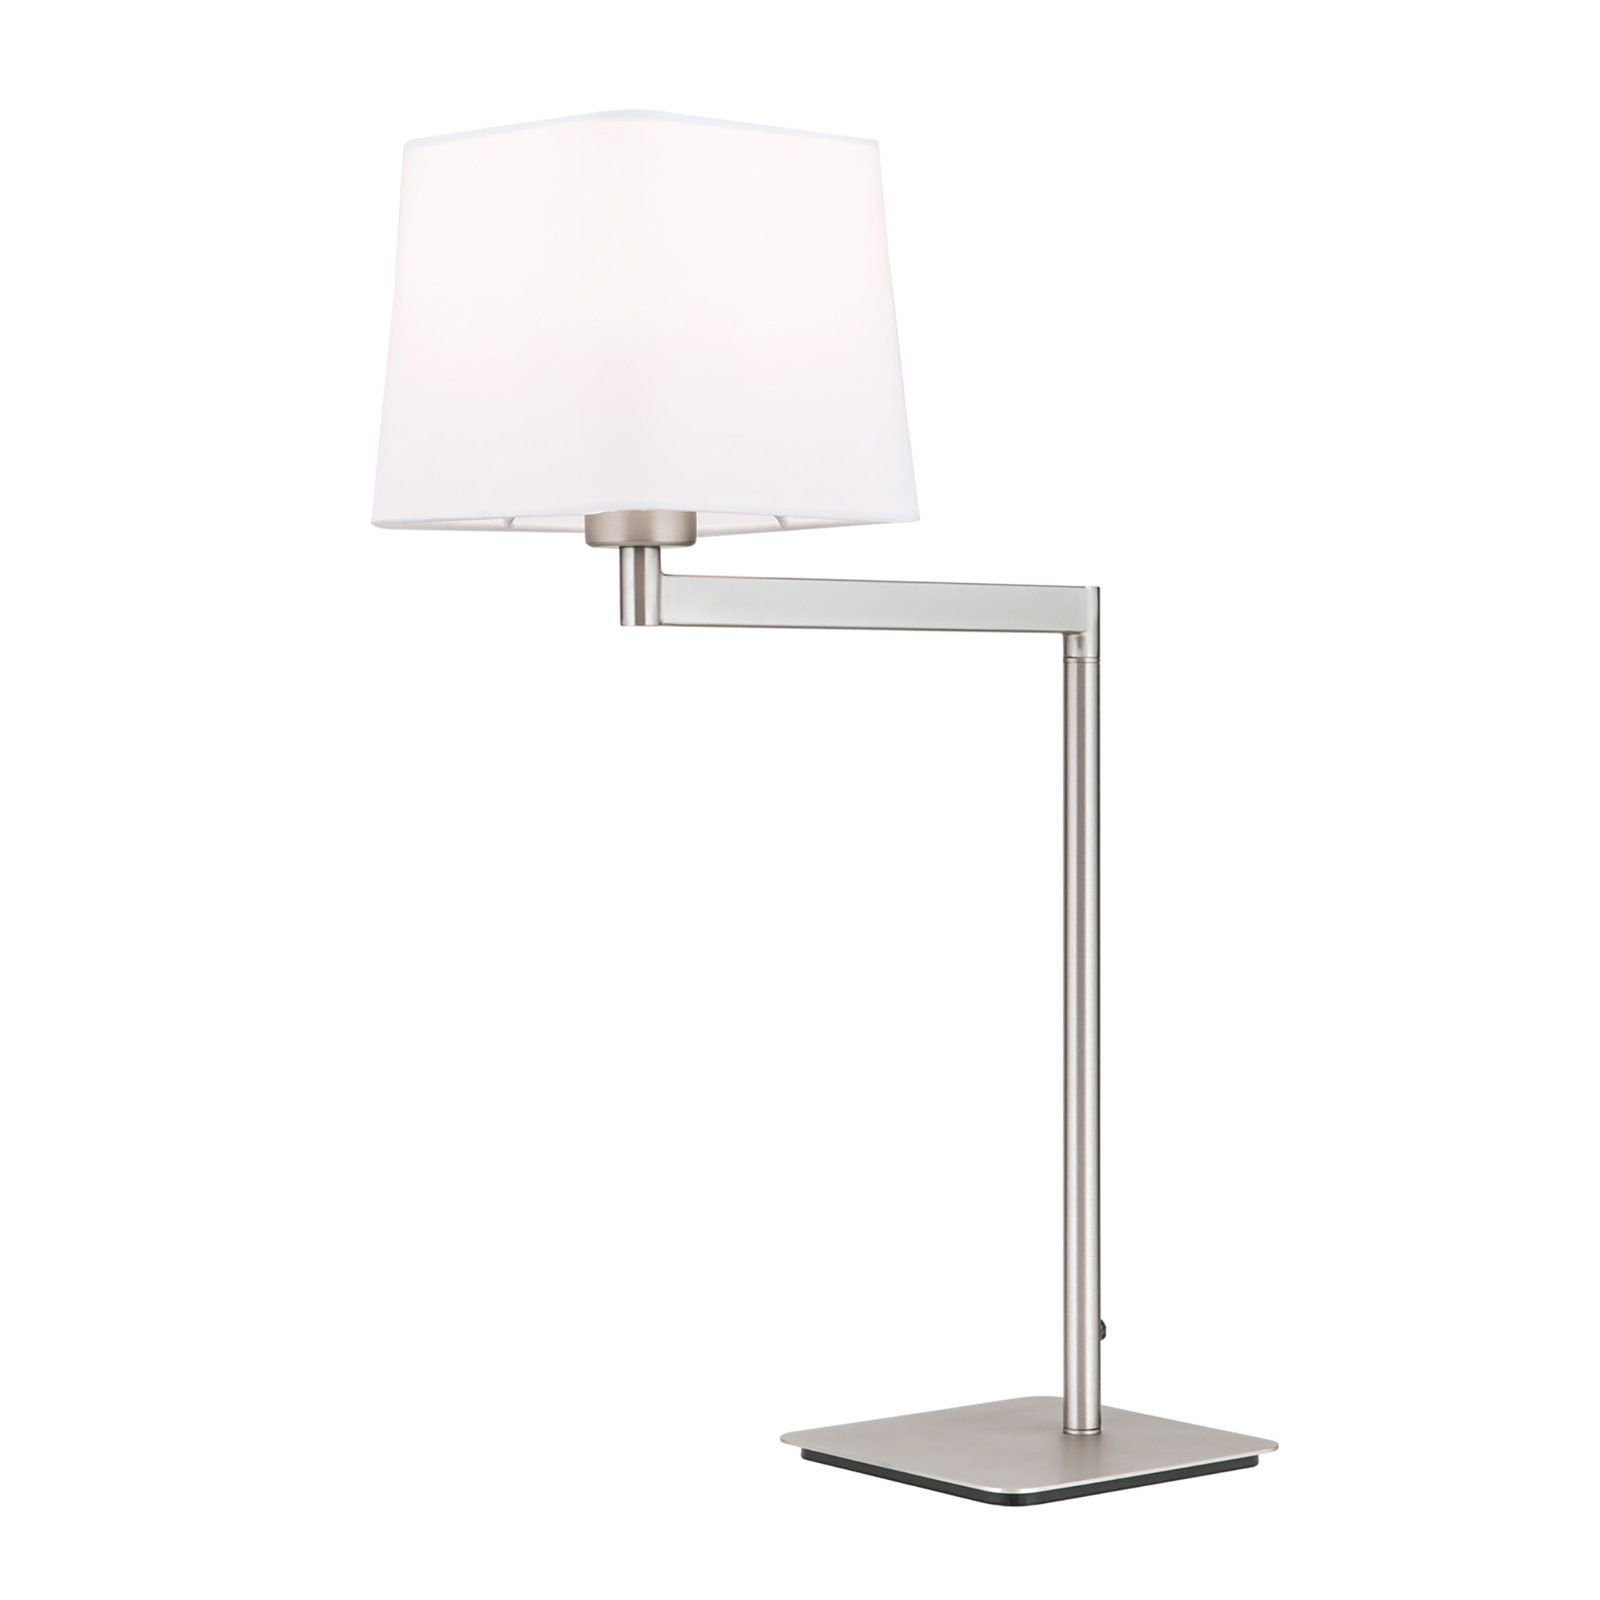 Carlton textile table lamp, matt nickel